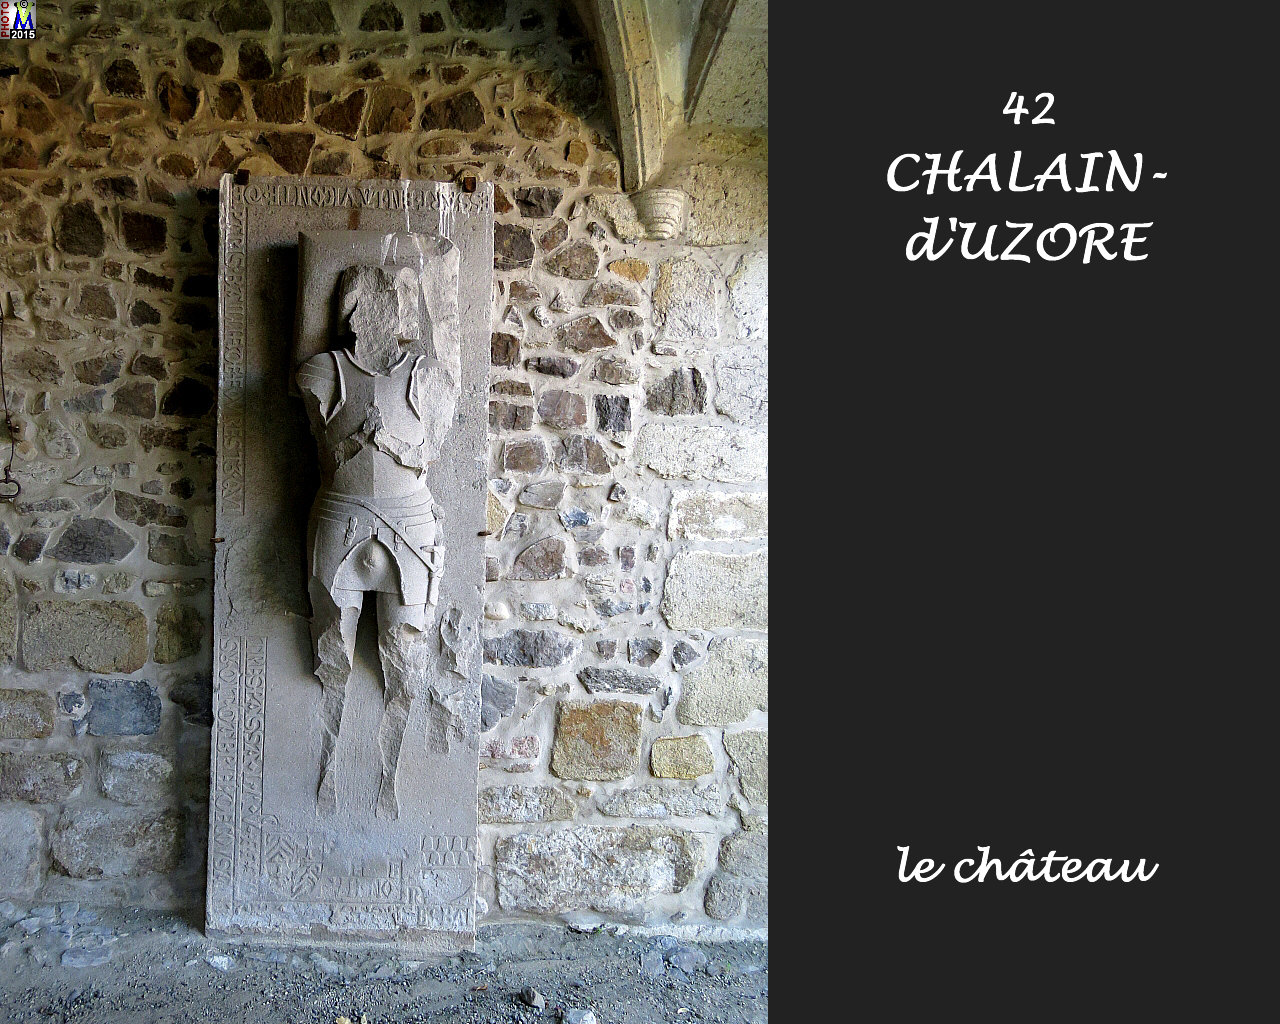 42CHALAIN-UZORE_chateau_107.jpg